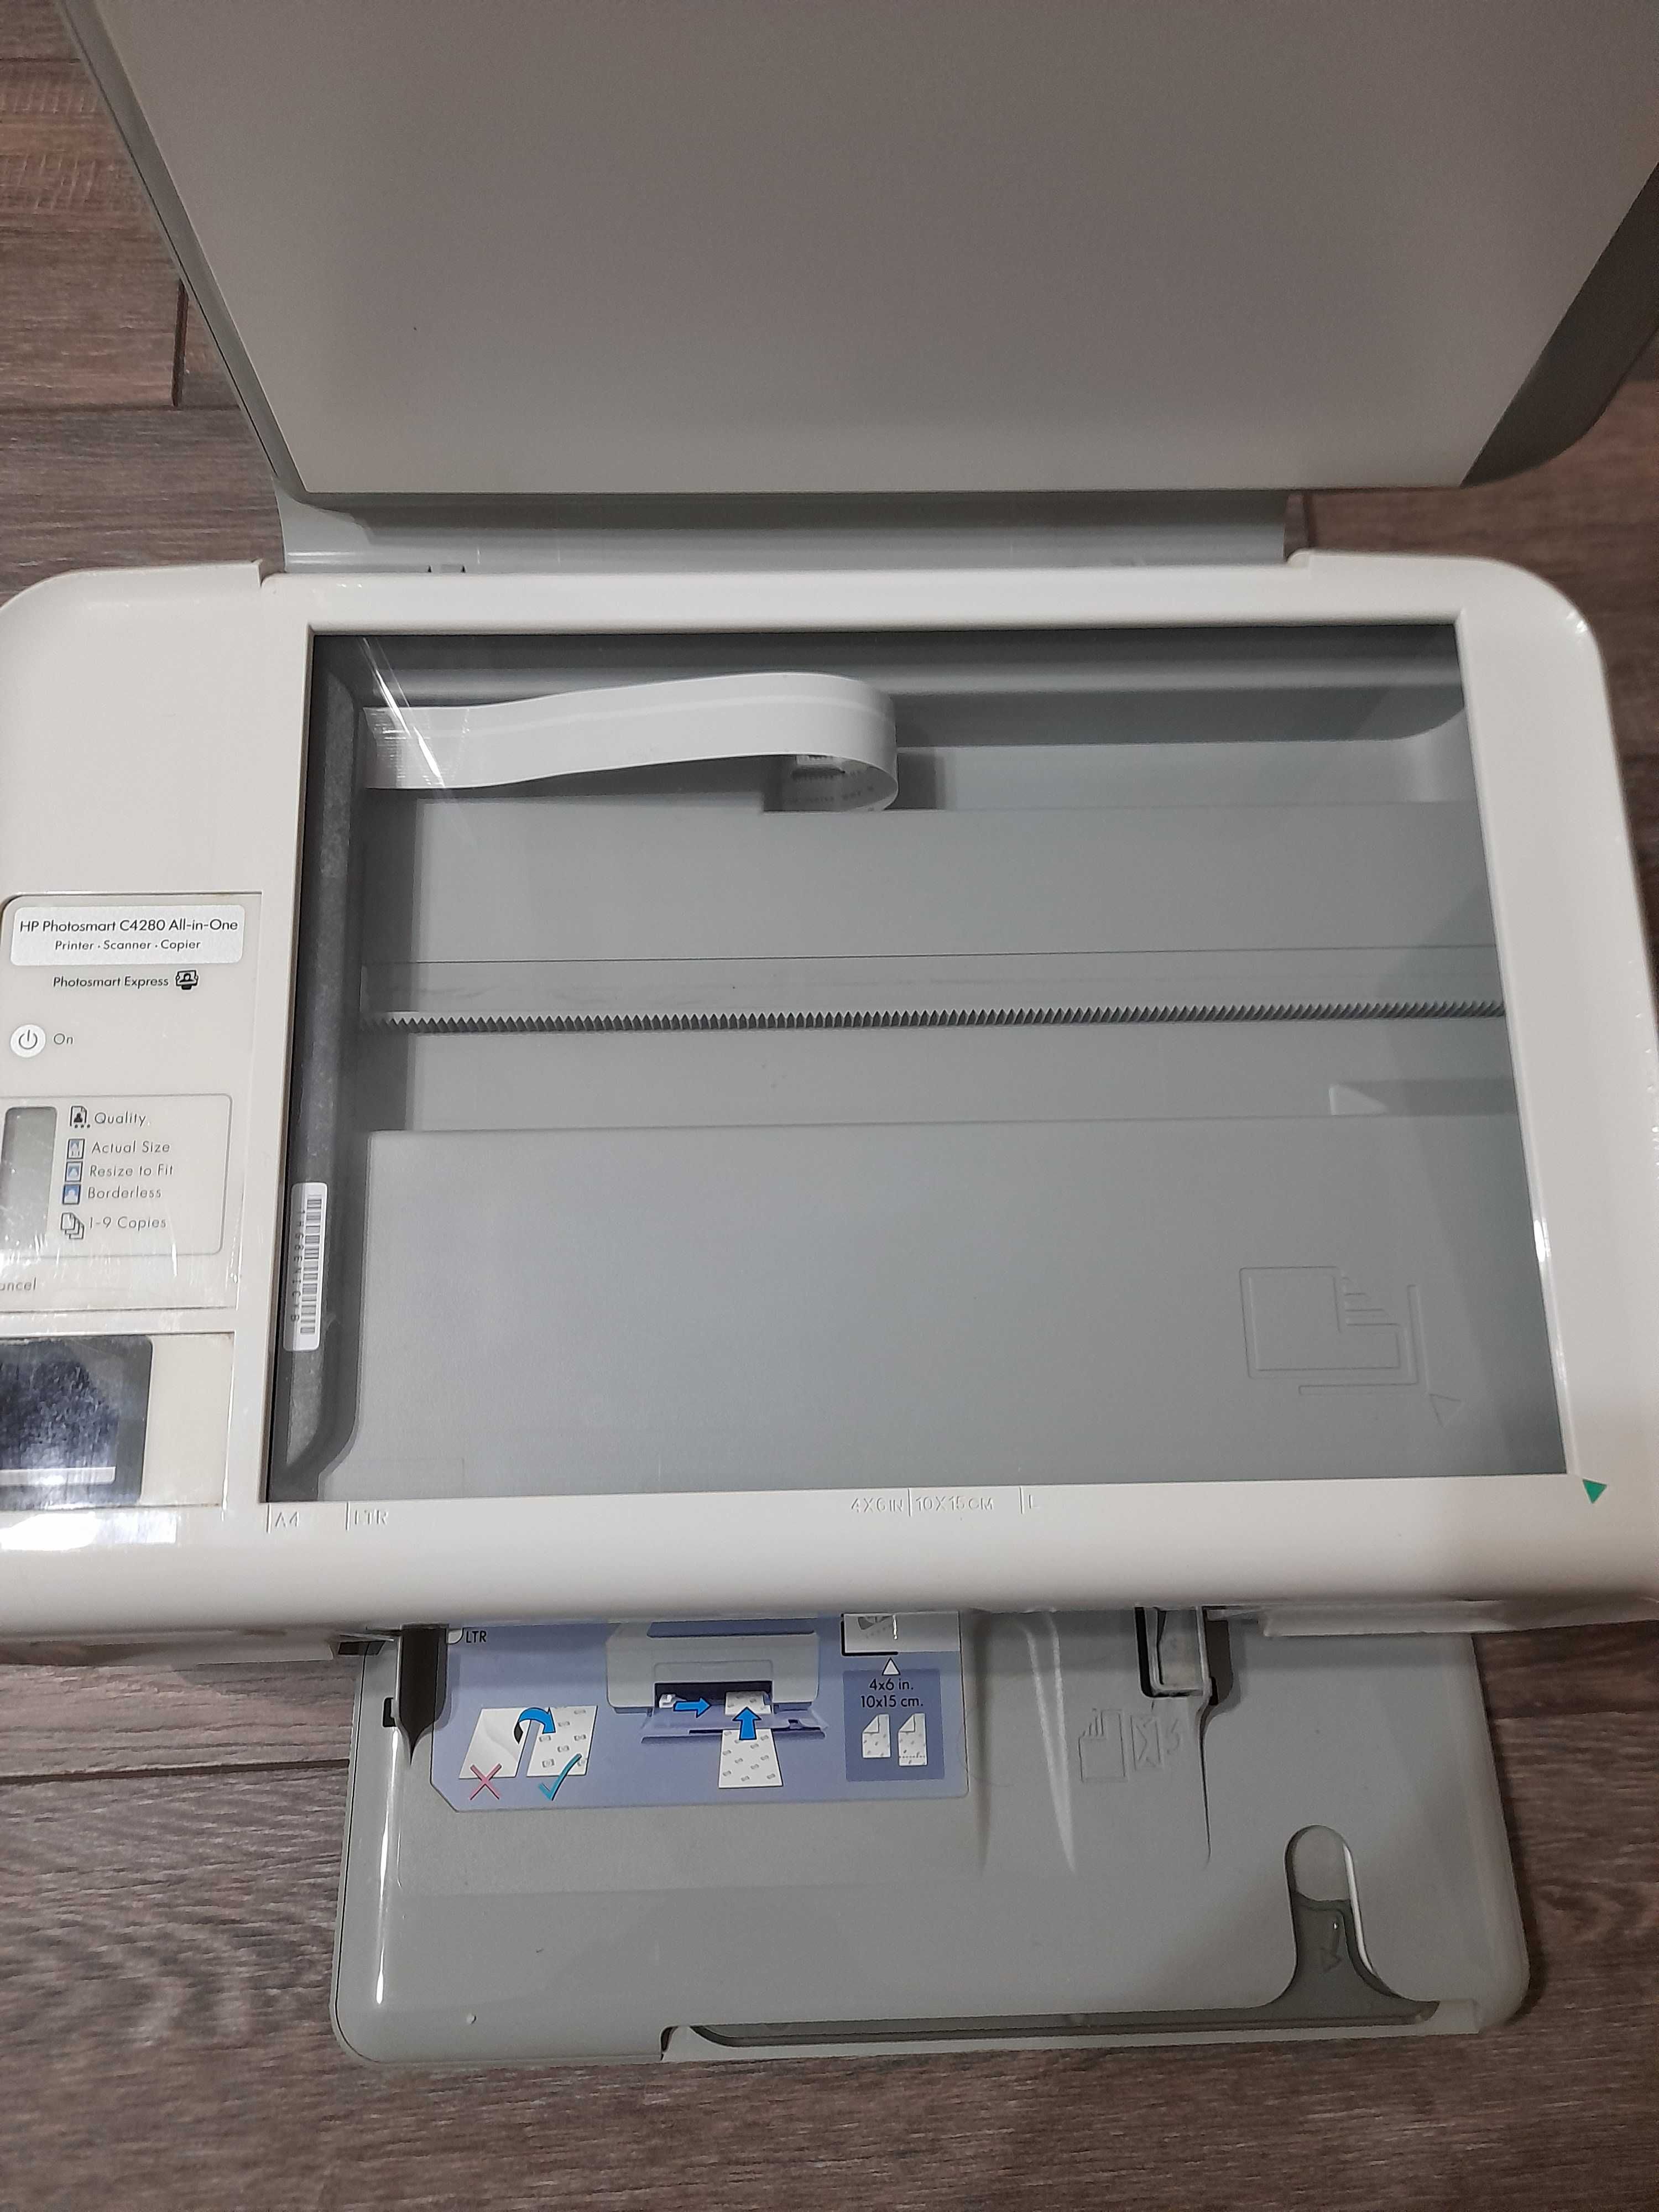 Vand imprimanta HP-C4280 All in one